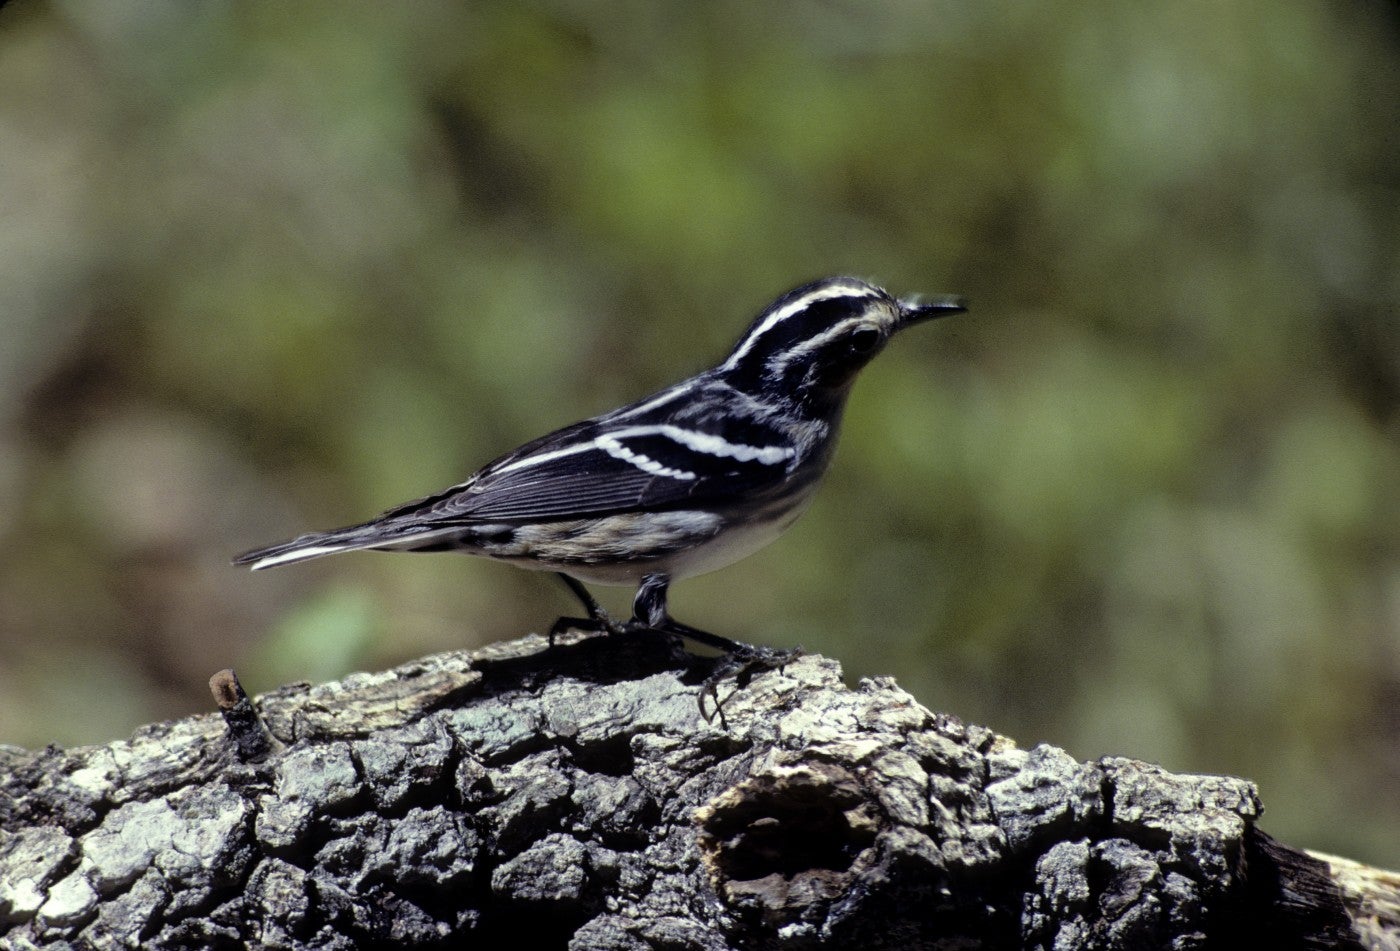 a small bird standing on bark from a fallen tree